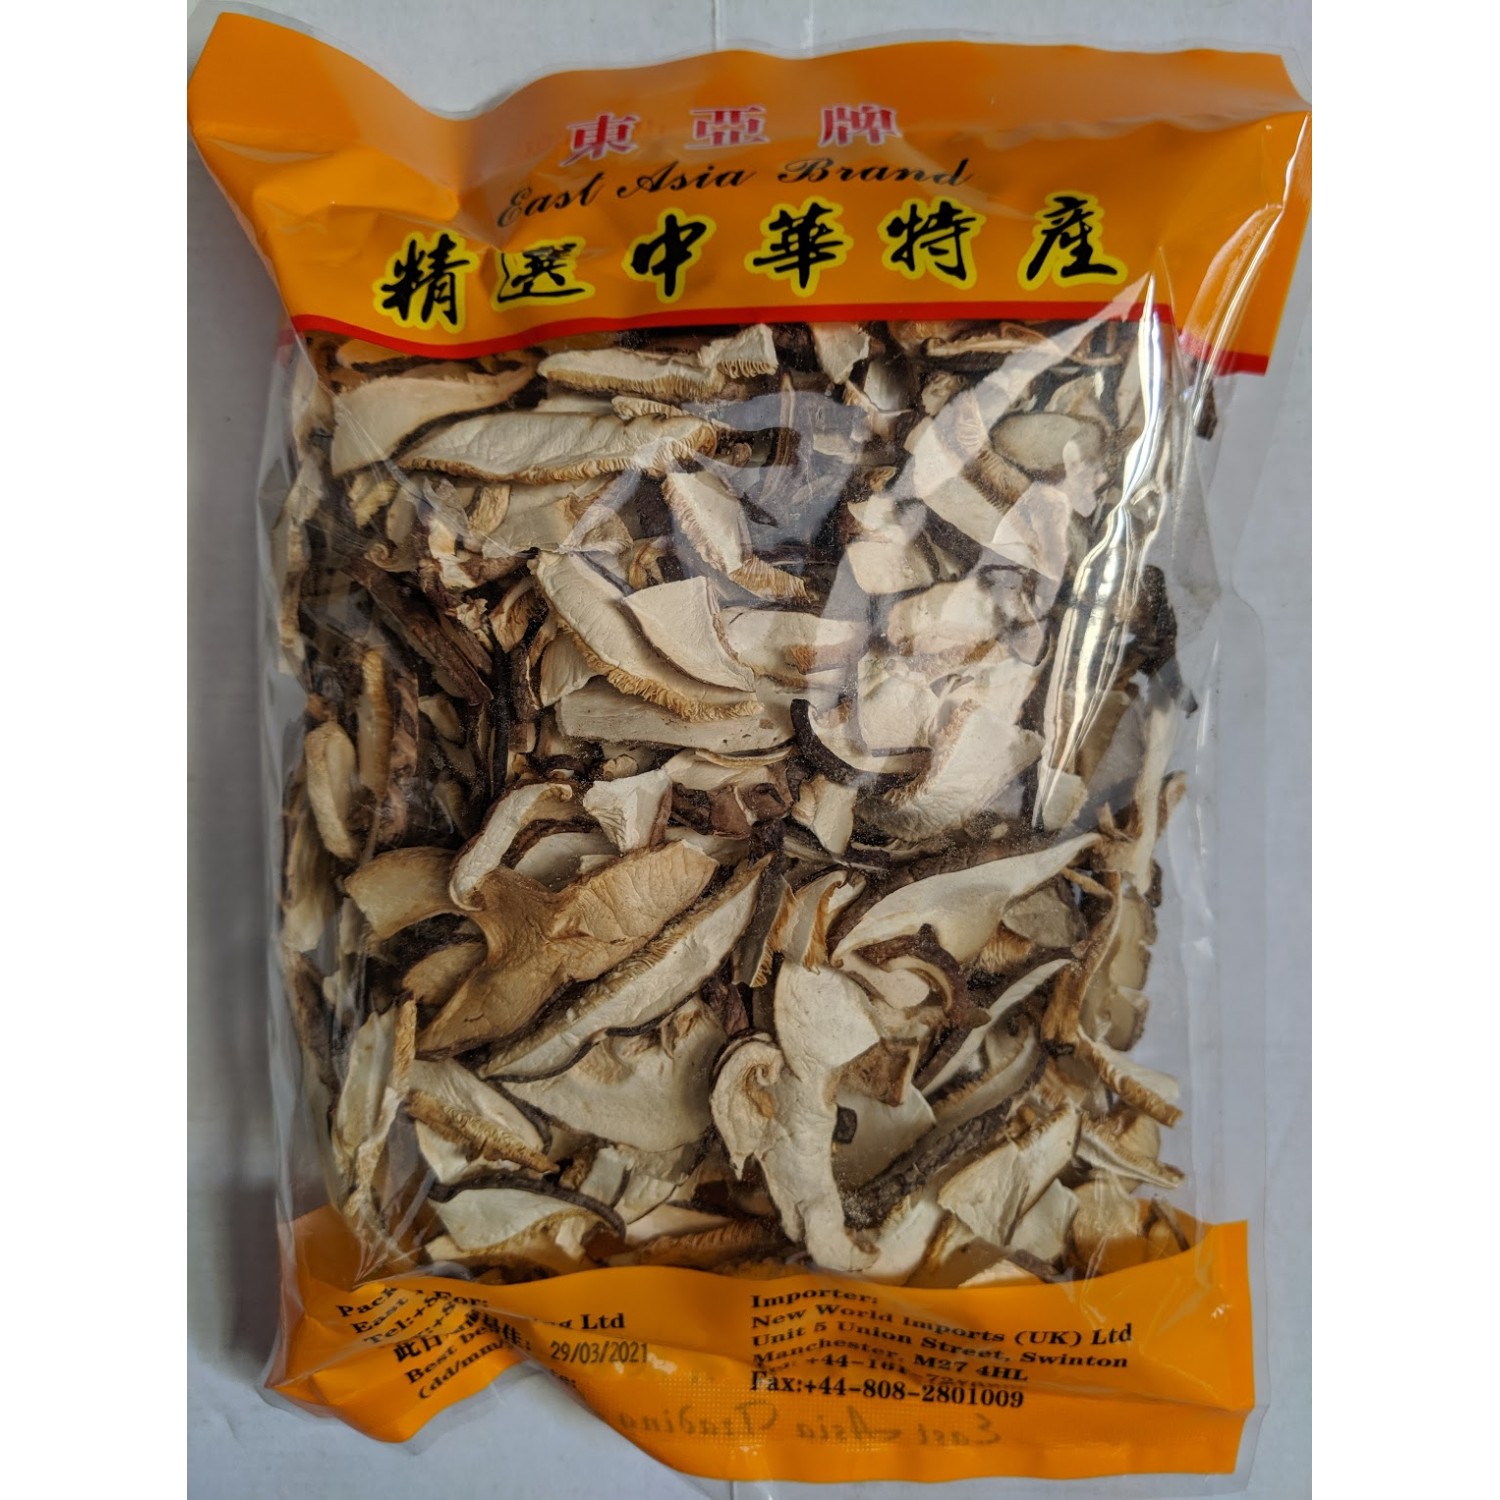 East Asia Brand Sliced Mushrooms 180g